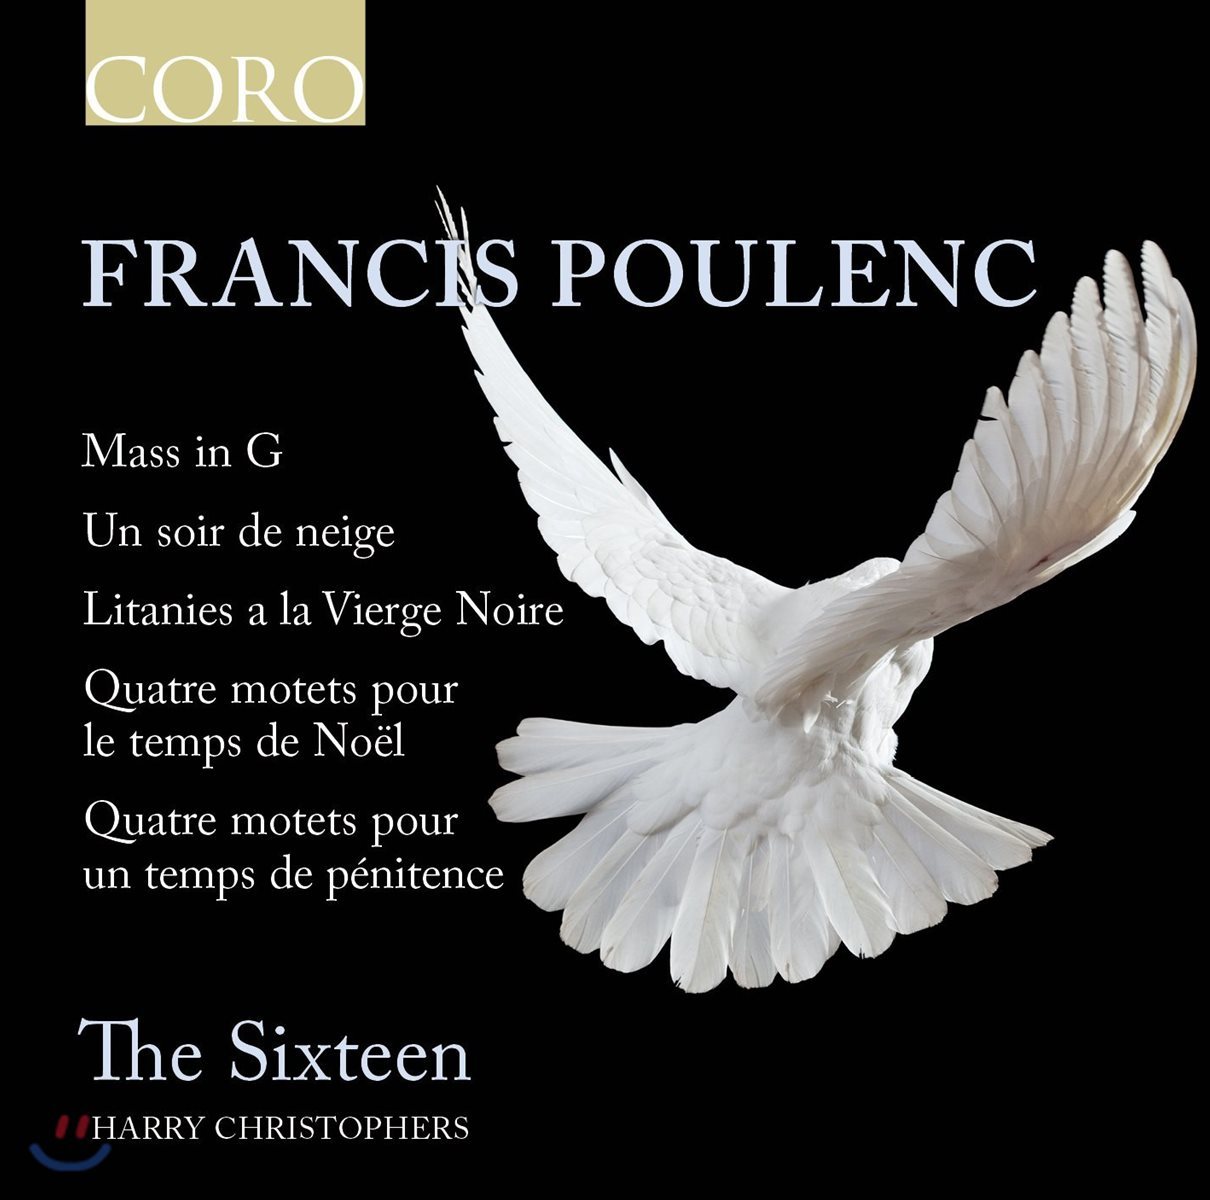 The Sixteen 풀랑크: 미사 G장조, 모테트, 검은 성모를 위한 리타니 외 (Poulenc: Mass in G, Litanies a la Vierge Noire, Motets)